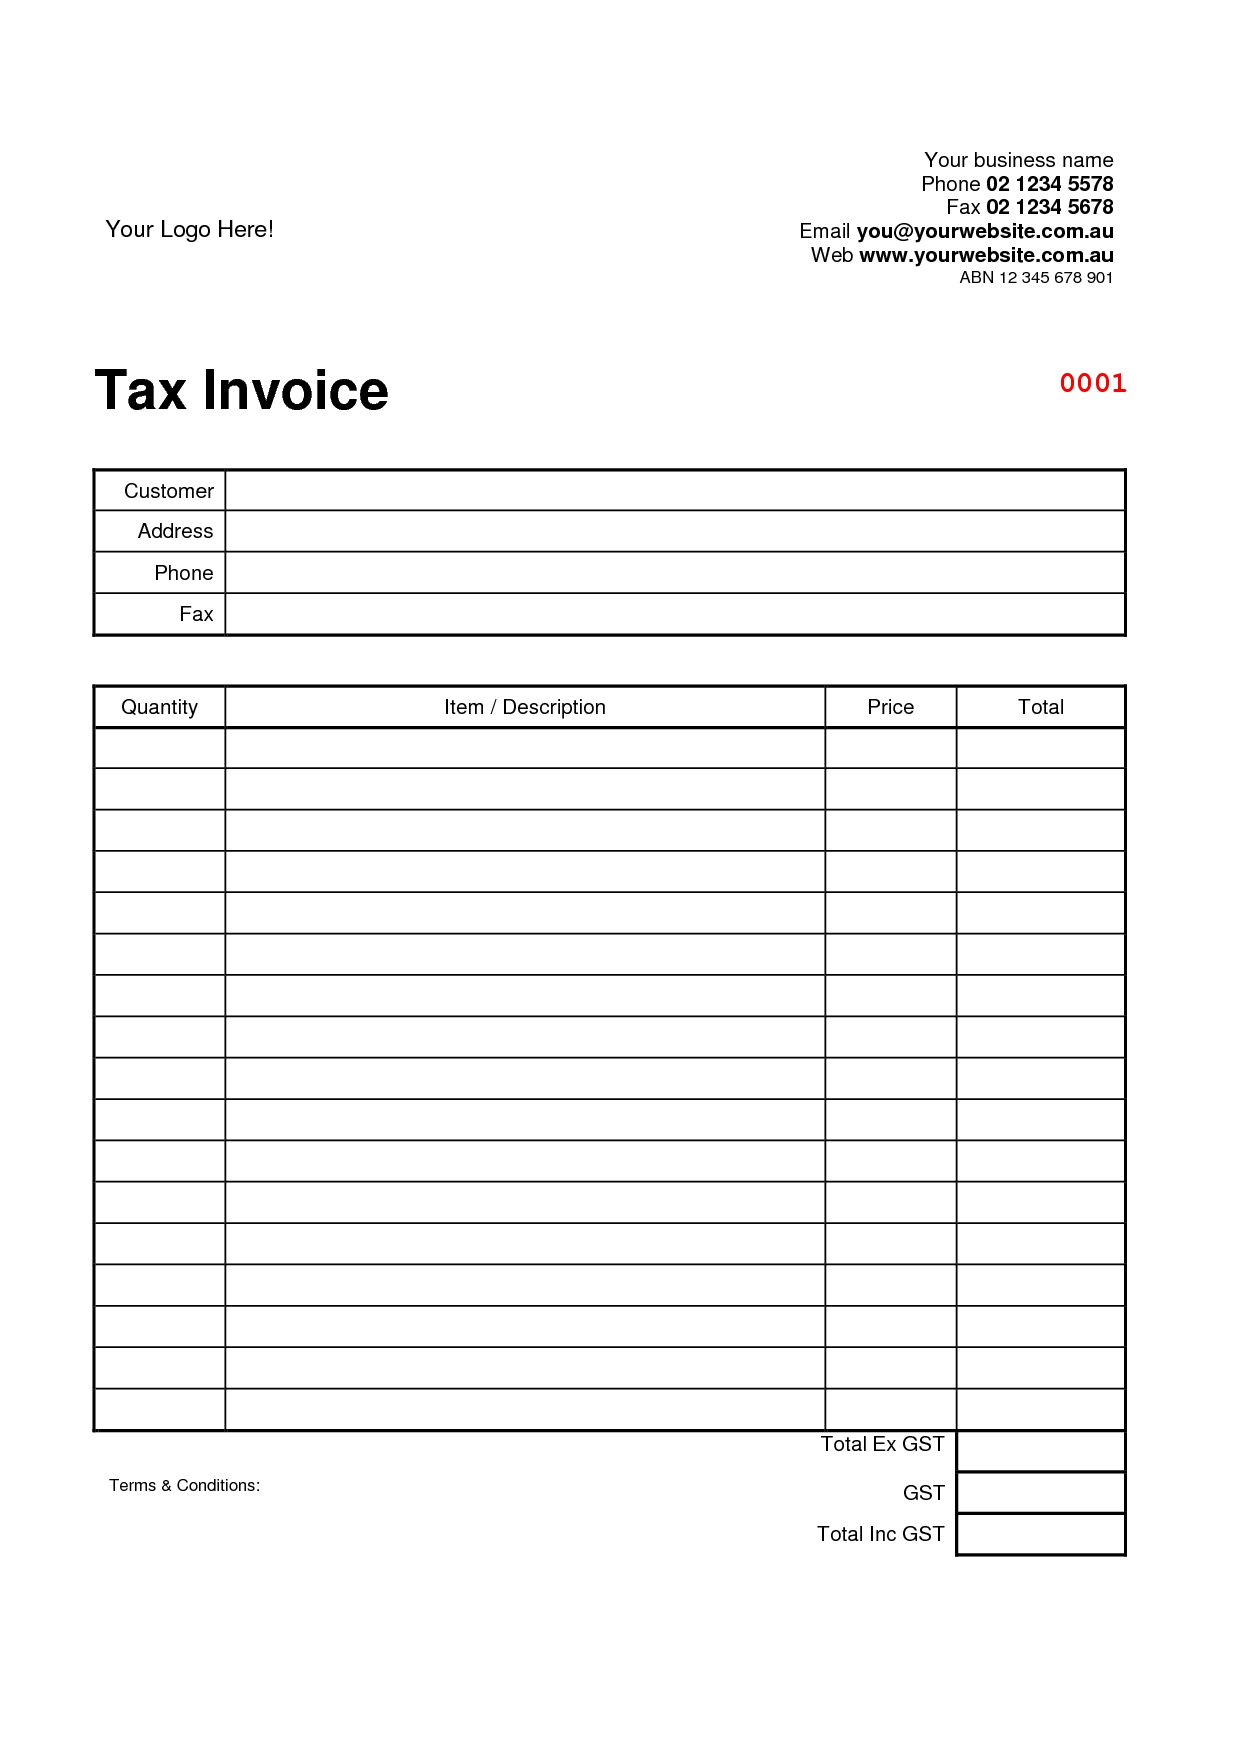 tax invoice template australia invoice template 2017 tax invoice examples